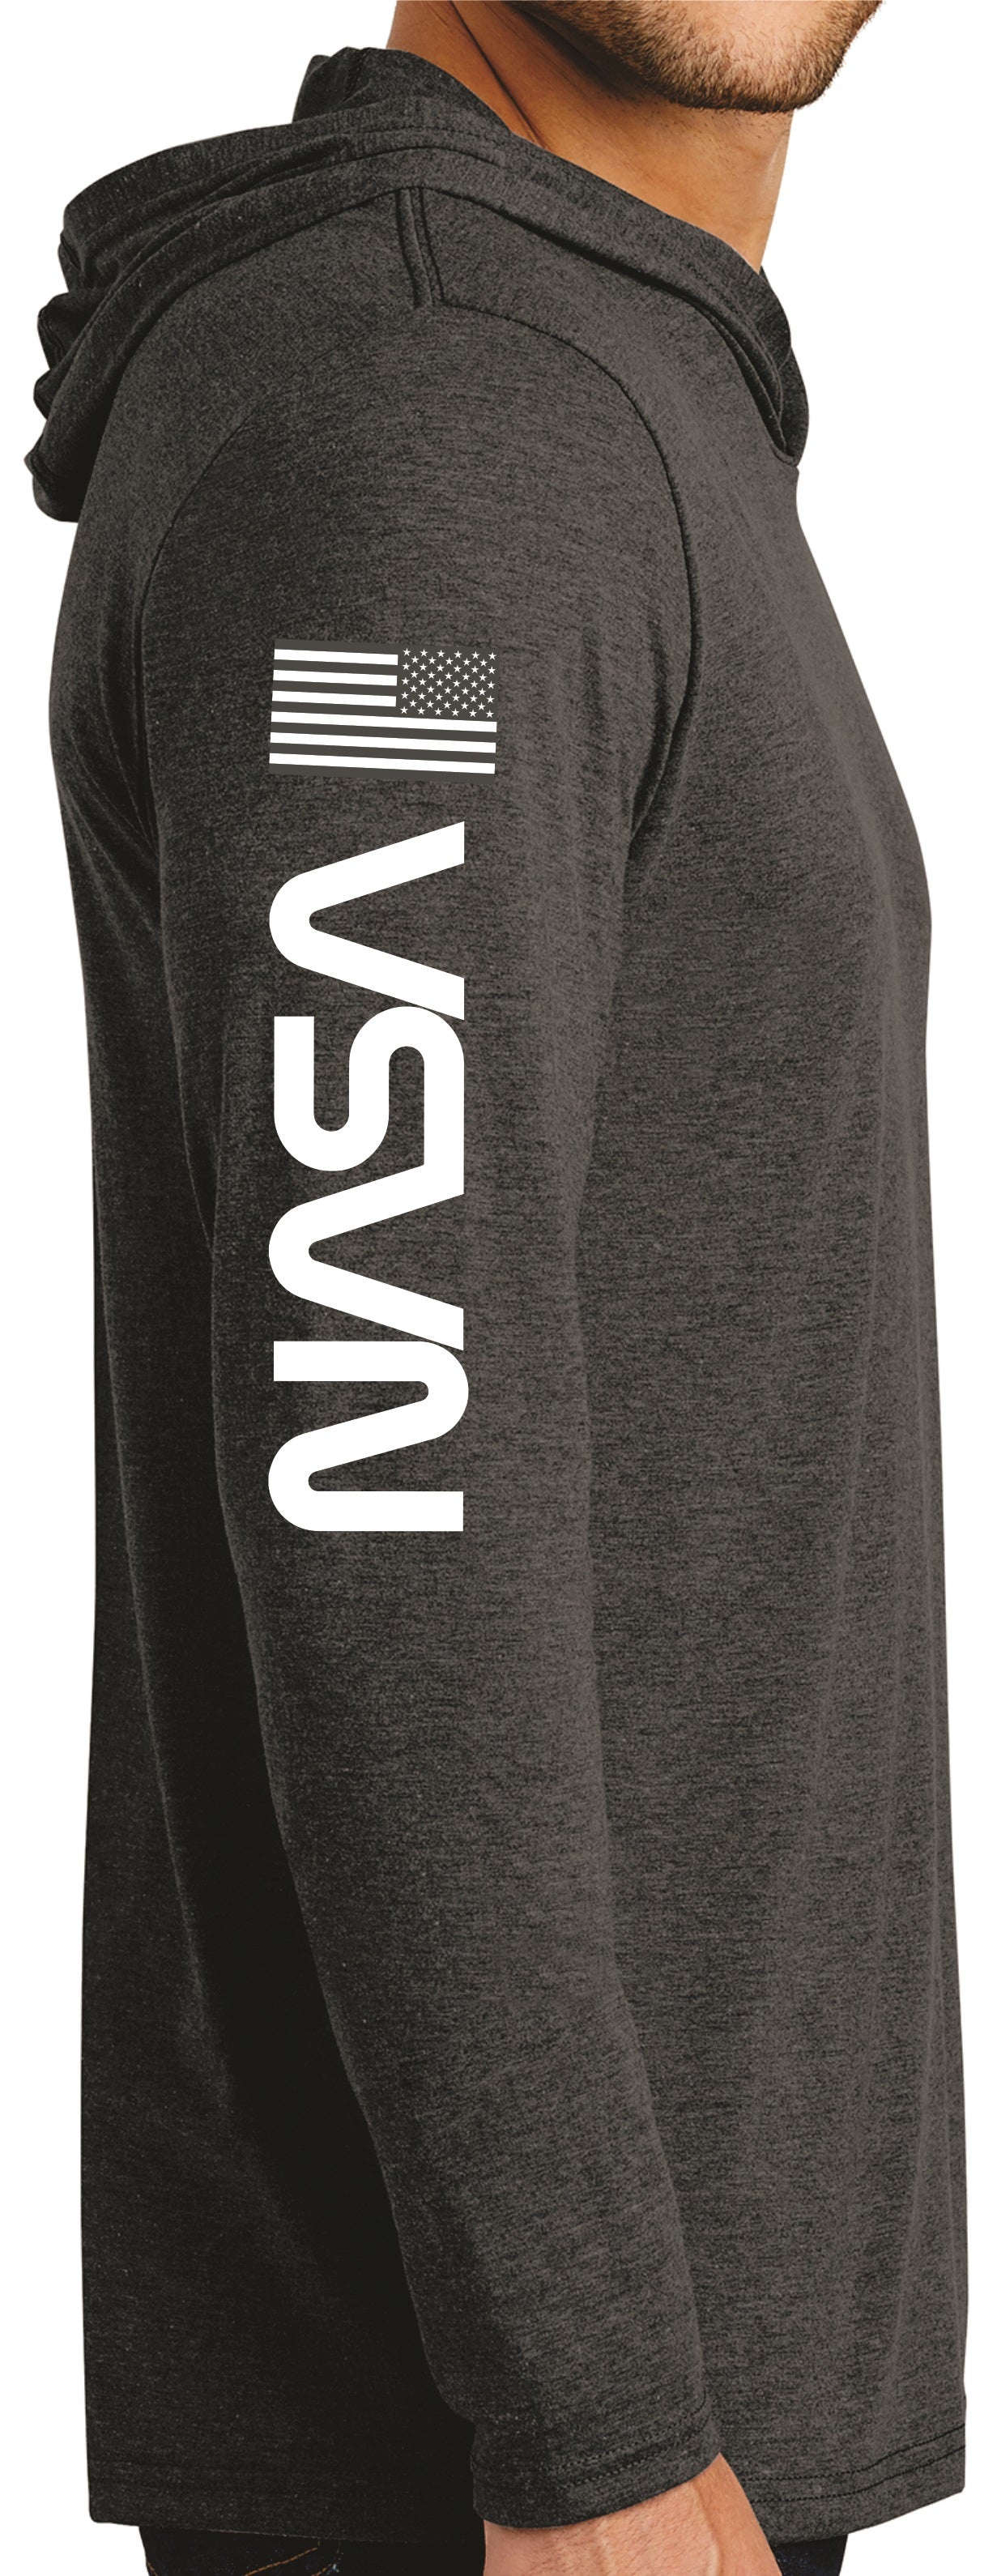 NASA Logo Long Sleeve Hooded Shirt with NASA Worm and USA Flag Black Frost